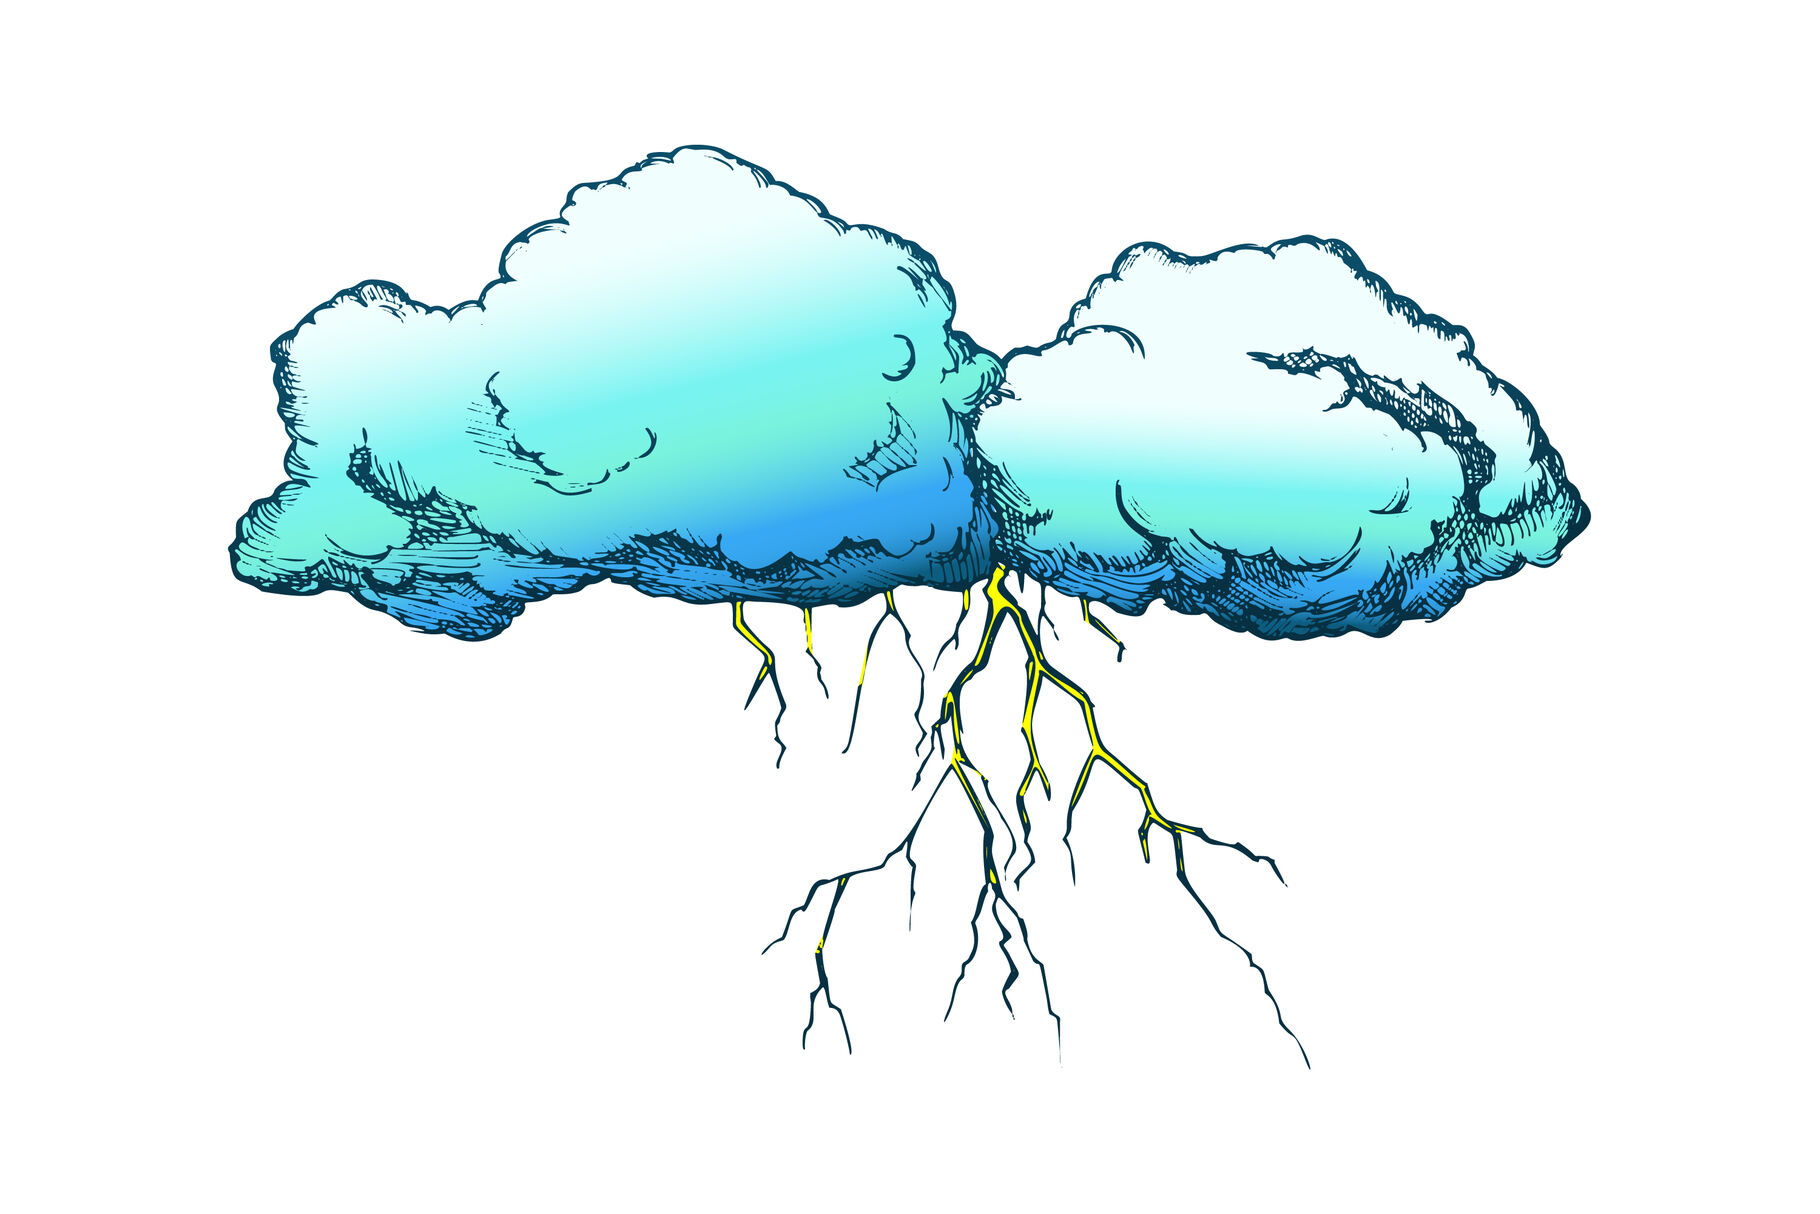 Storm Cloud Drawing Images - Free Download on Freepik